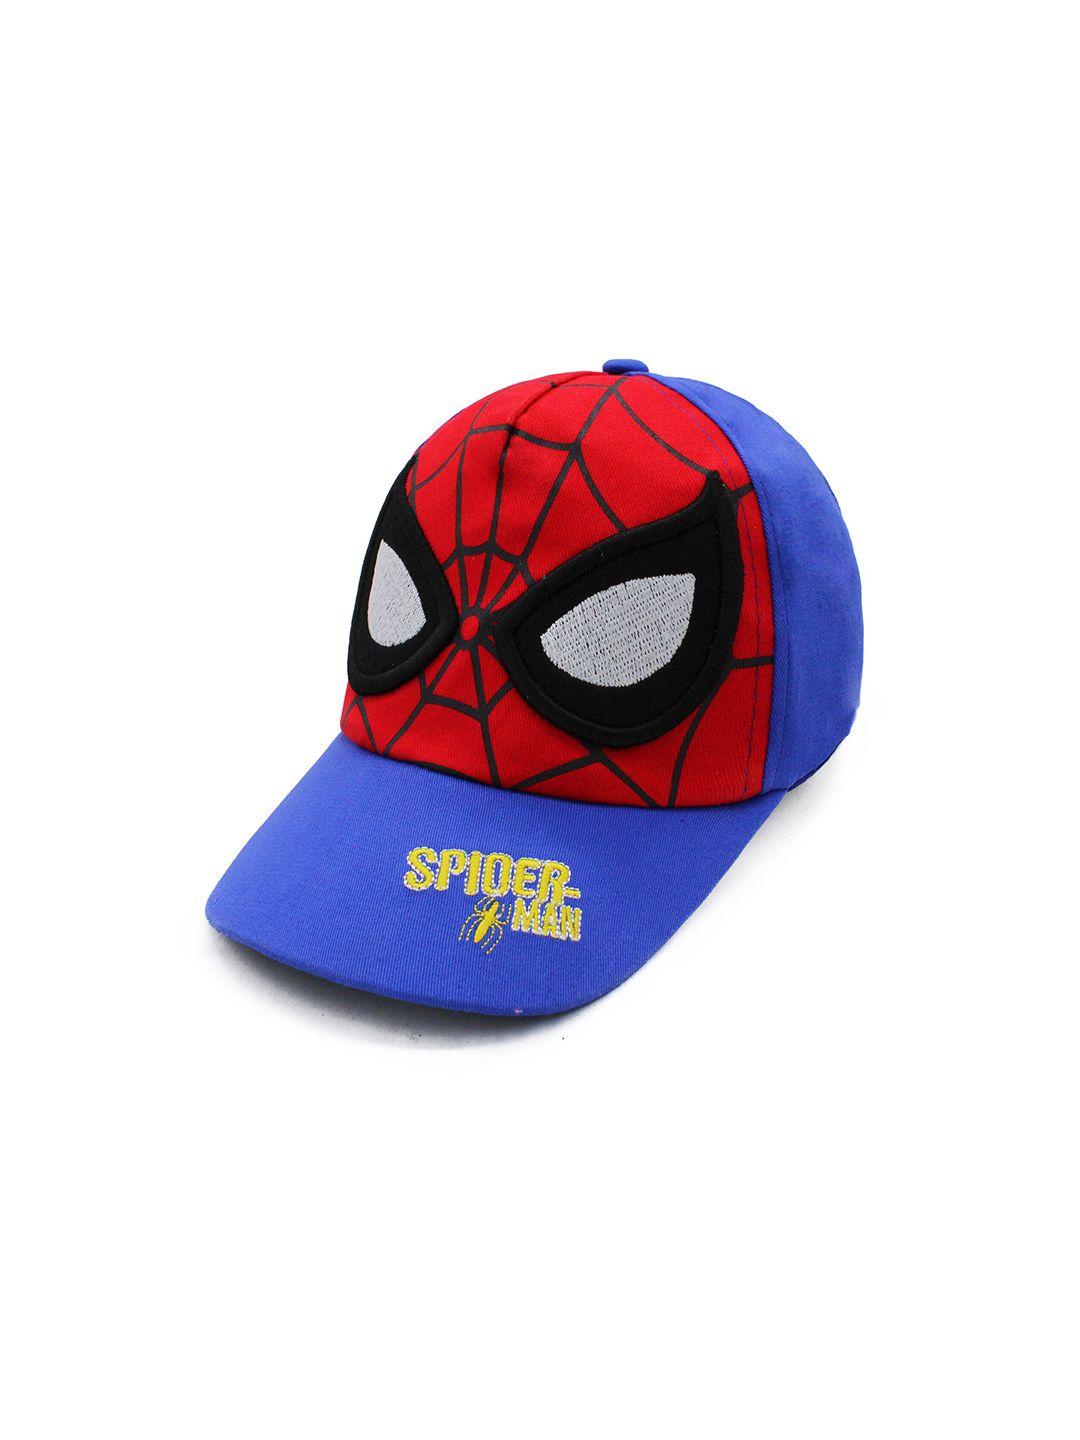 jenna kids-boys spider man printed baseball cap